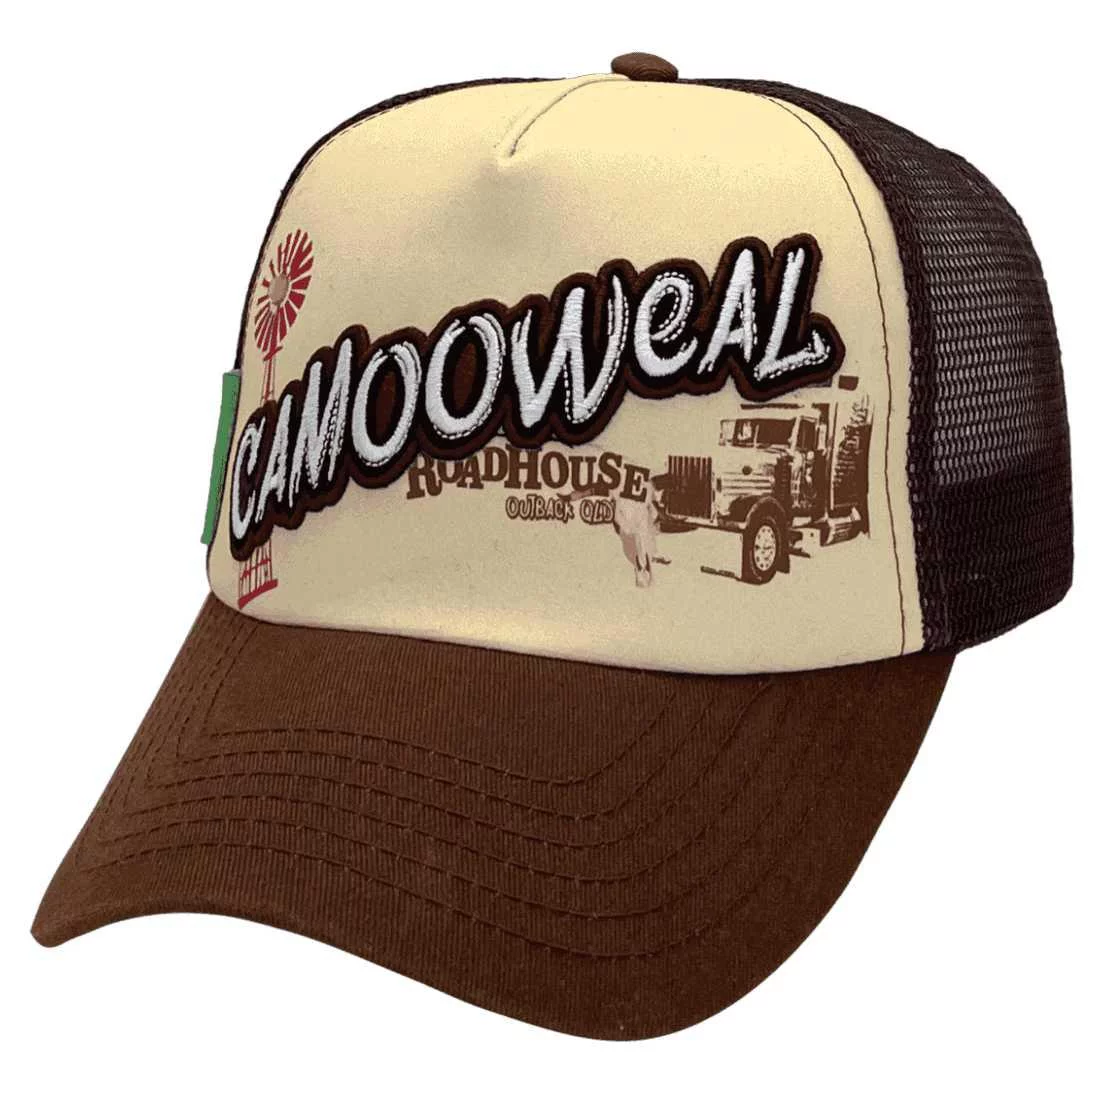 Camooweal RoadHouse PUMA QLD LP Original Basic Aussie Trucker Hat with Australian Head Fit Crown Size